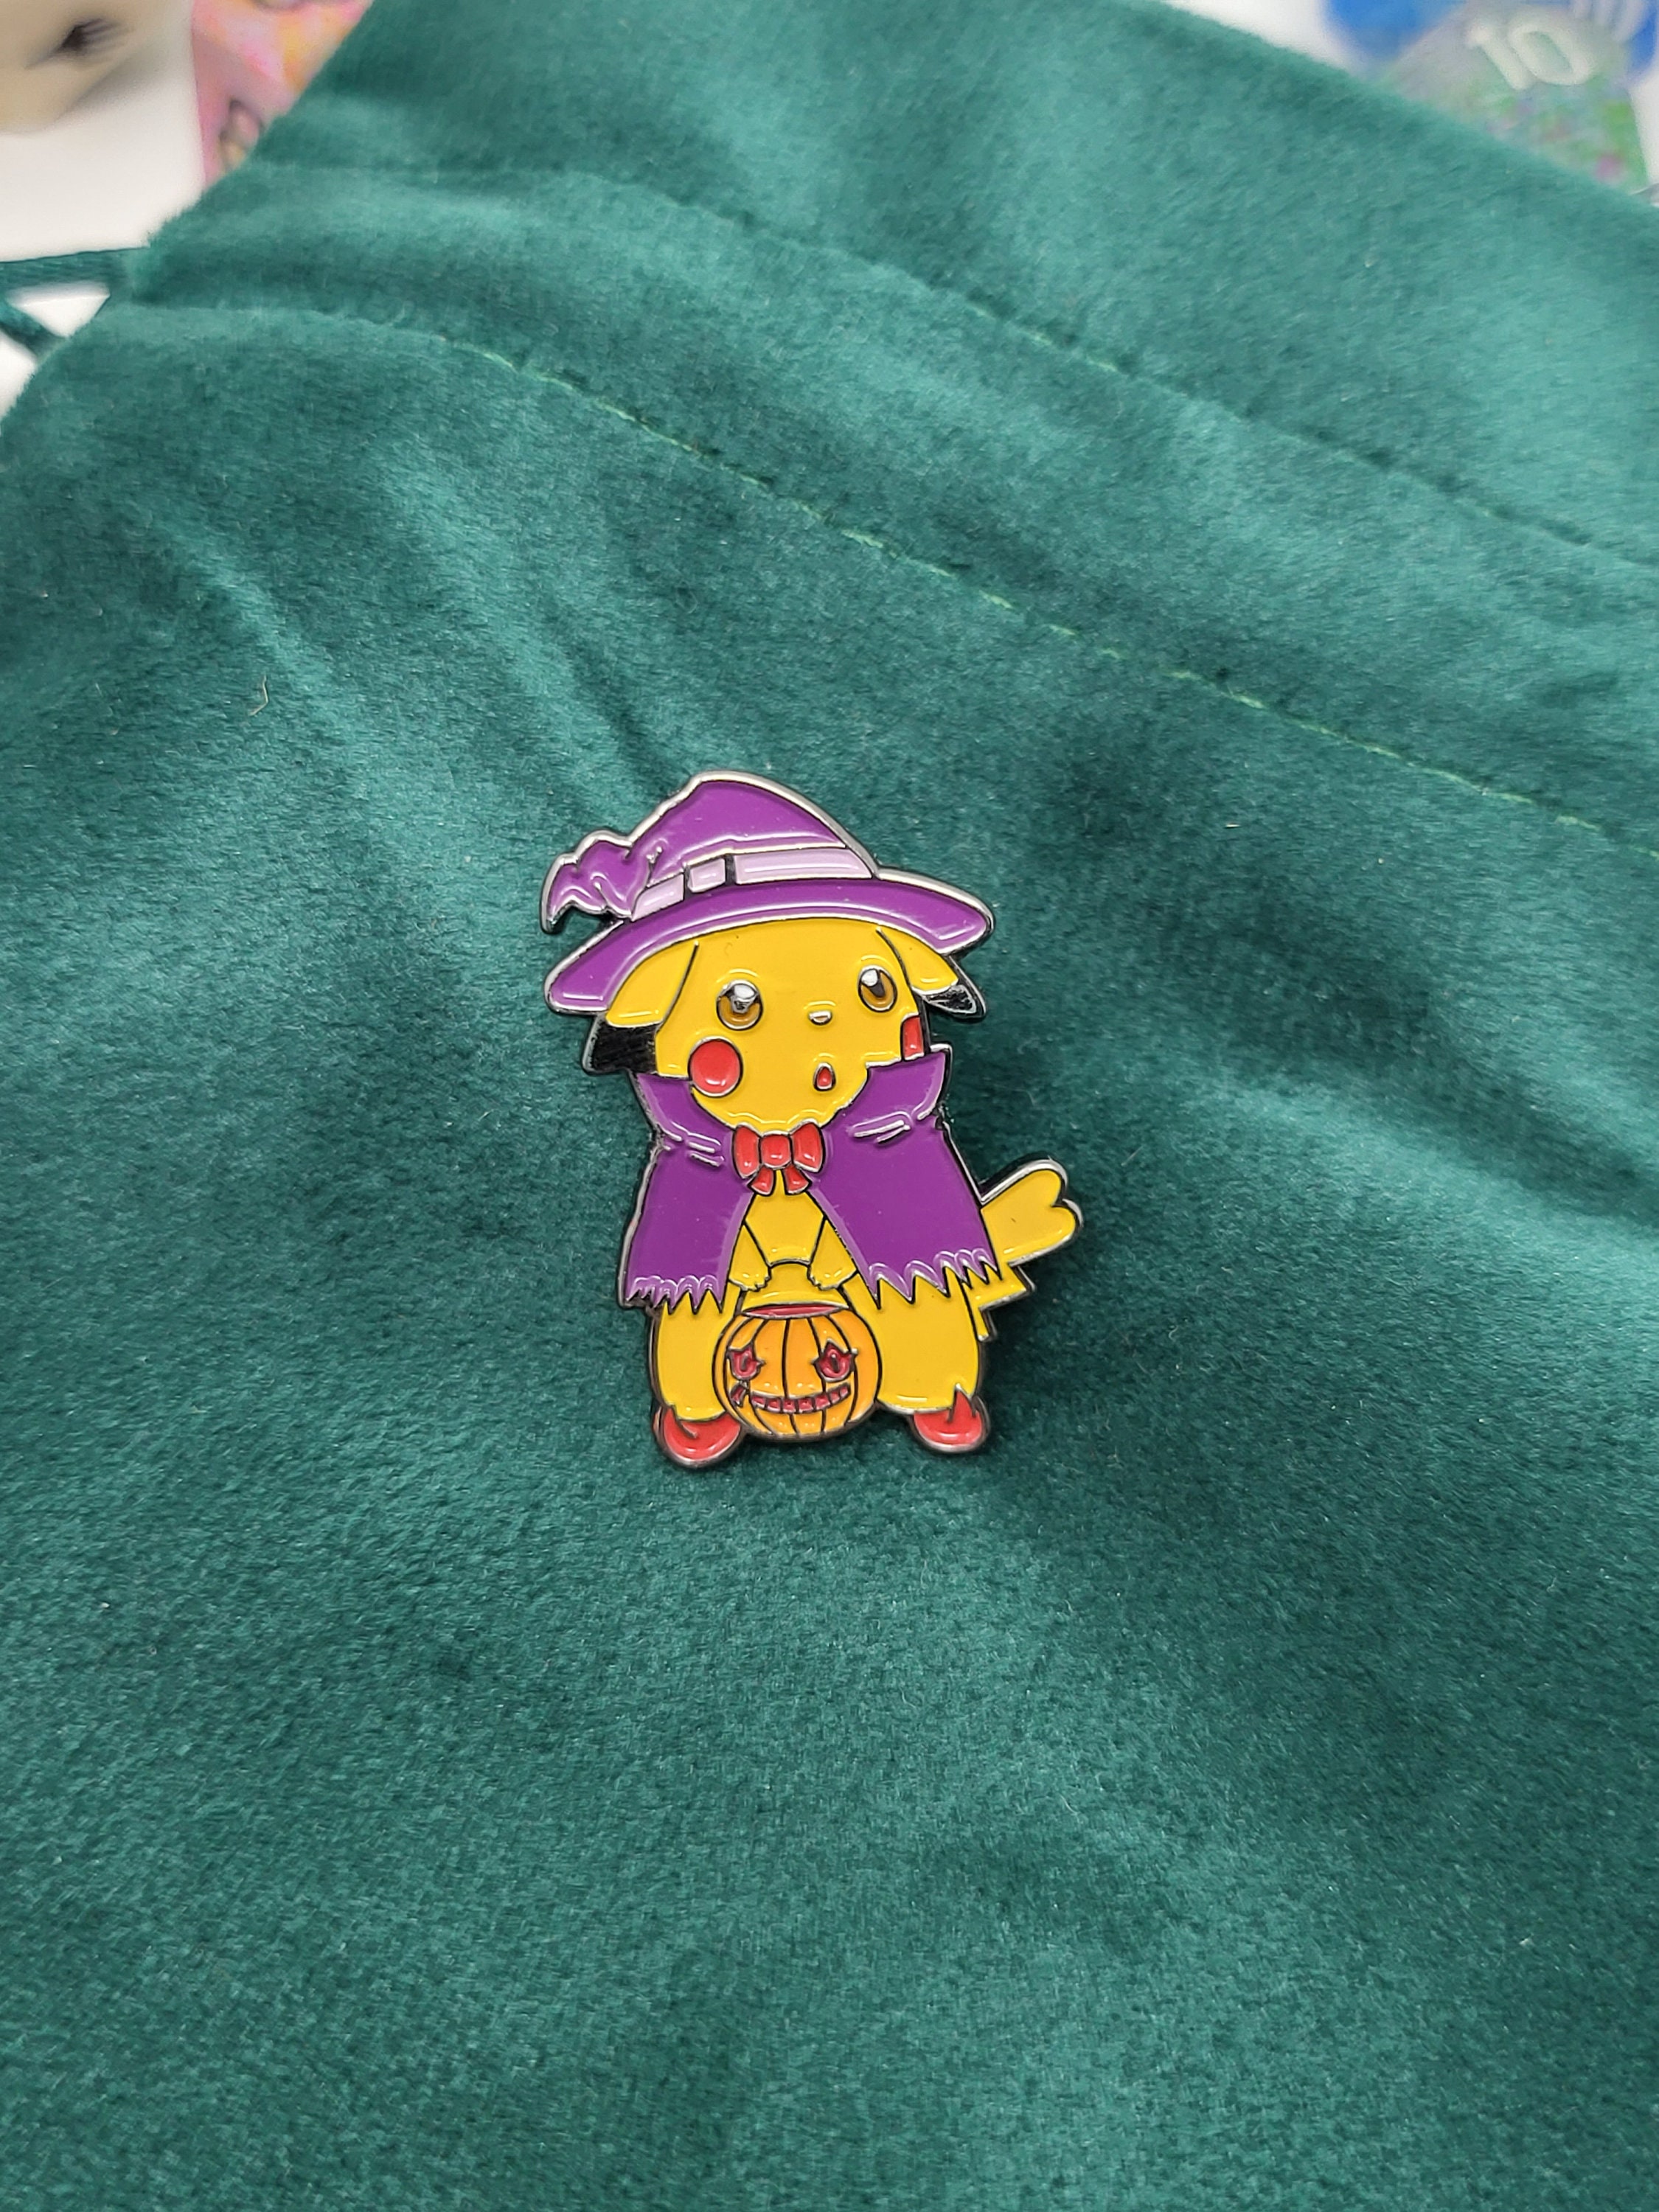 Pin on Pokemon costumes